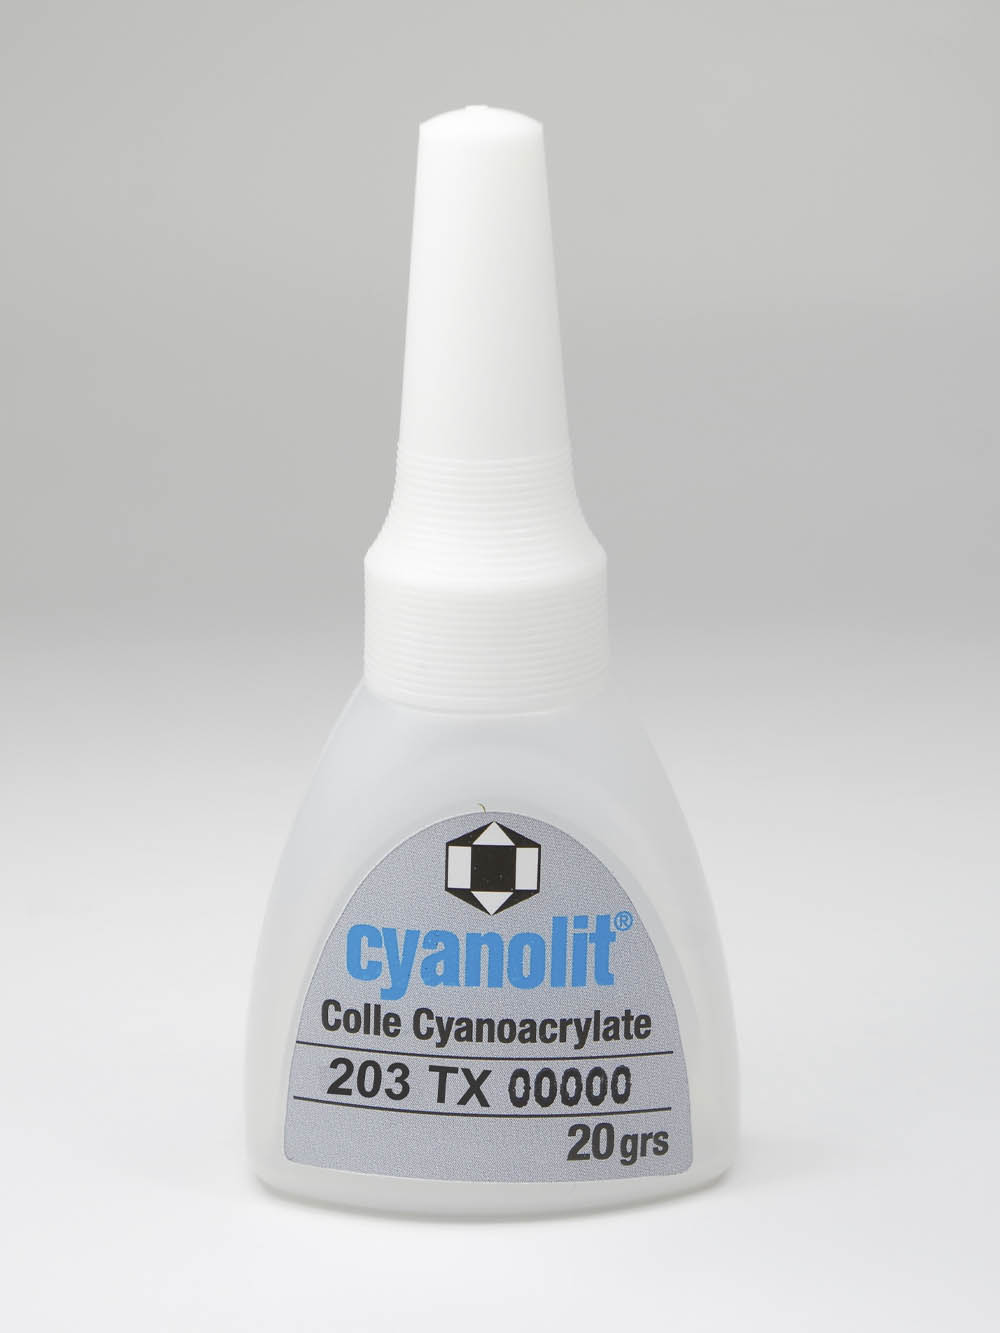 Cyanolite 203 TX medical grade cyanoacrylate adhesive image - ECT Adhesives